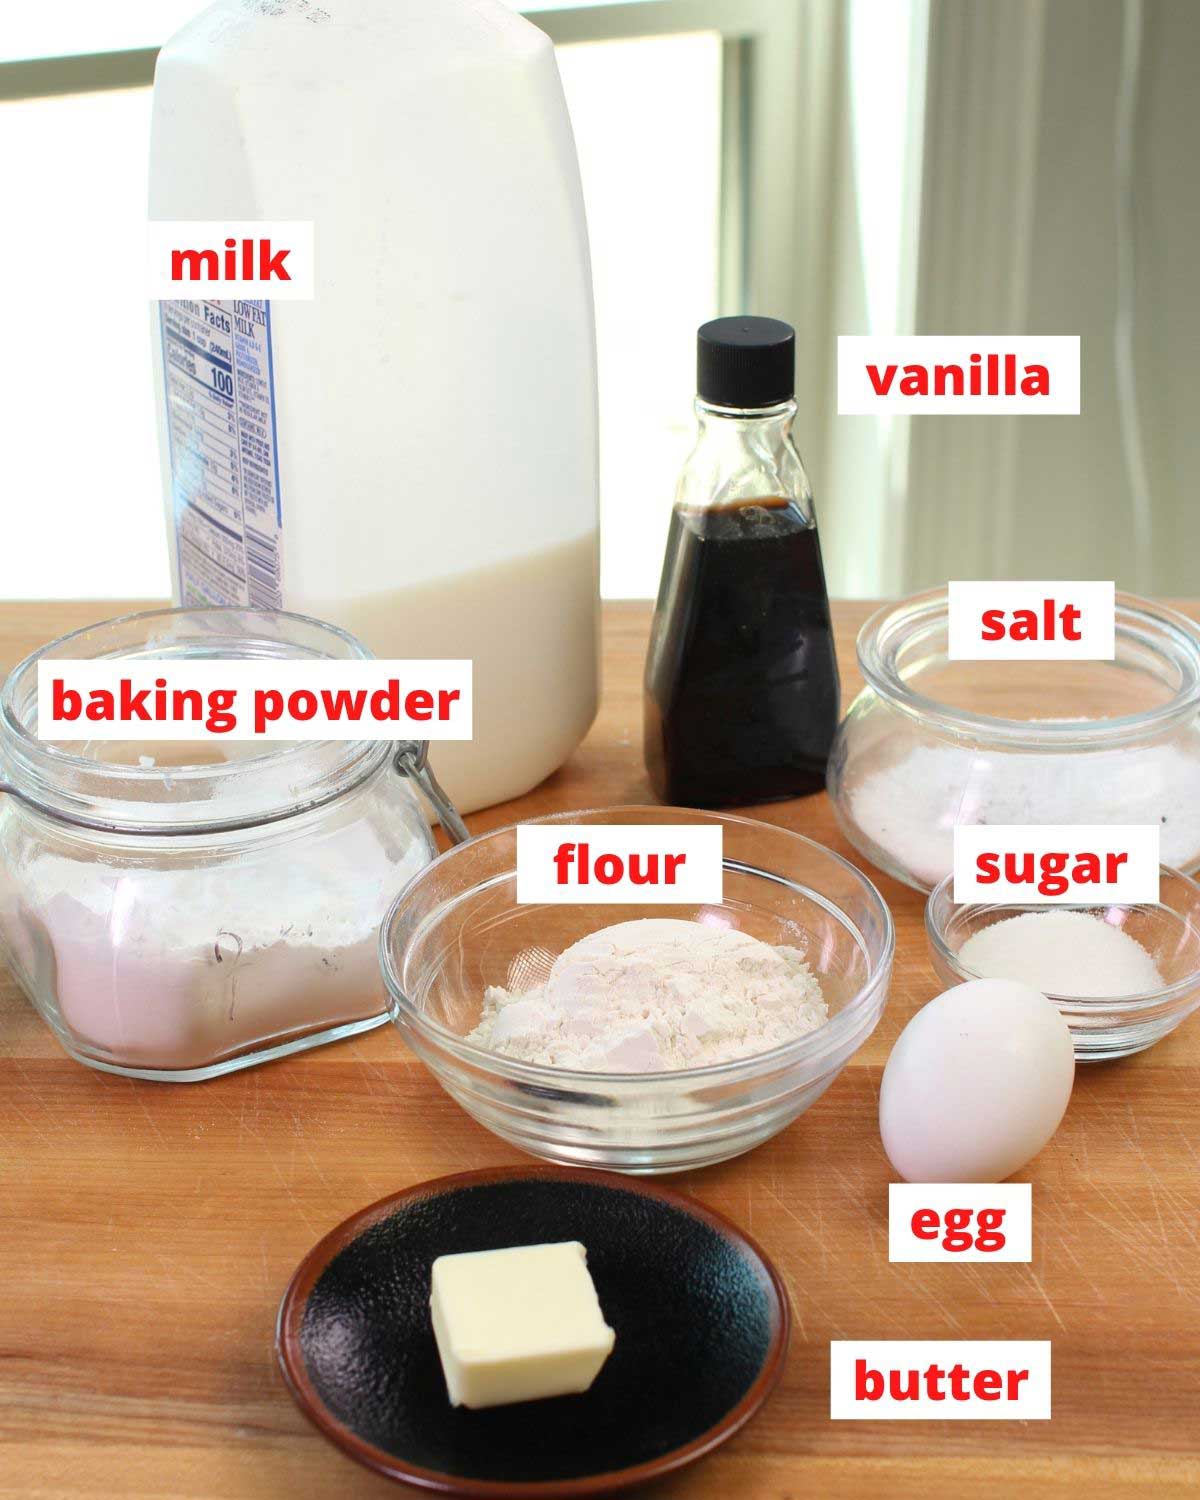 Ingredient shown for pancake recipe includes milk, baking powder, flour, vanilla, sugar, an egg, and salt.